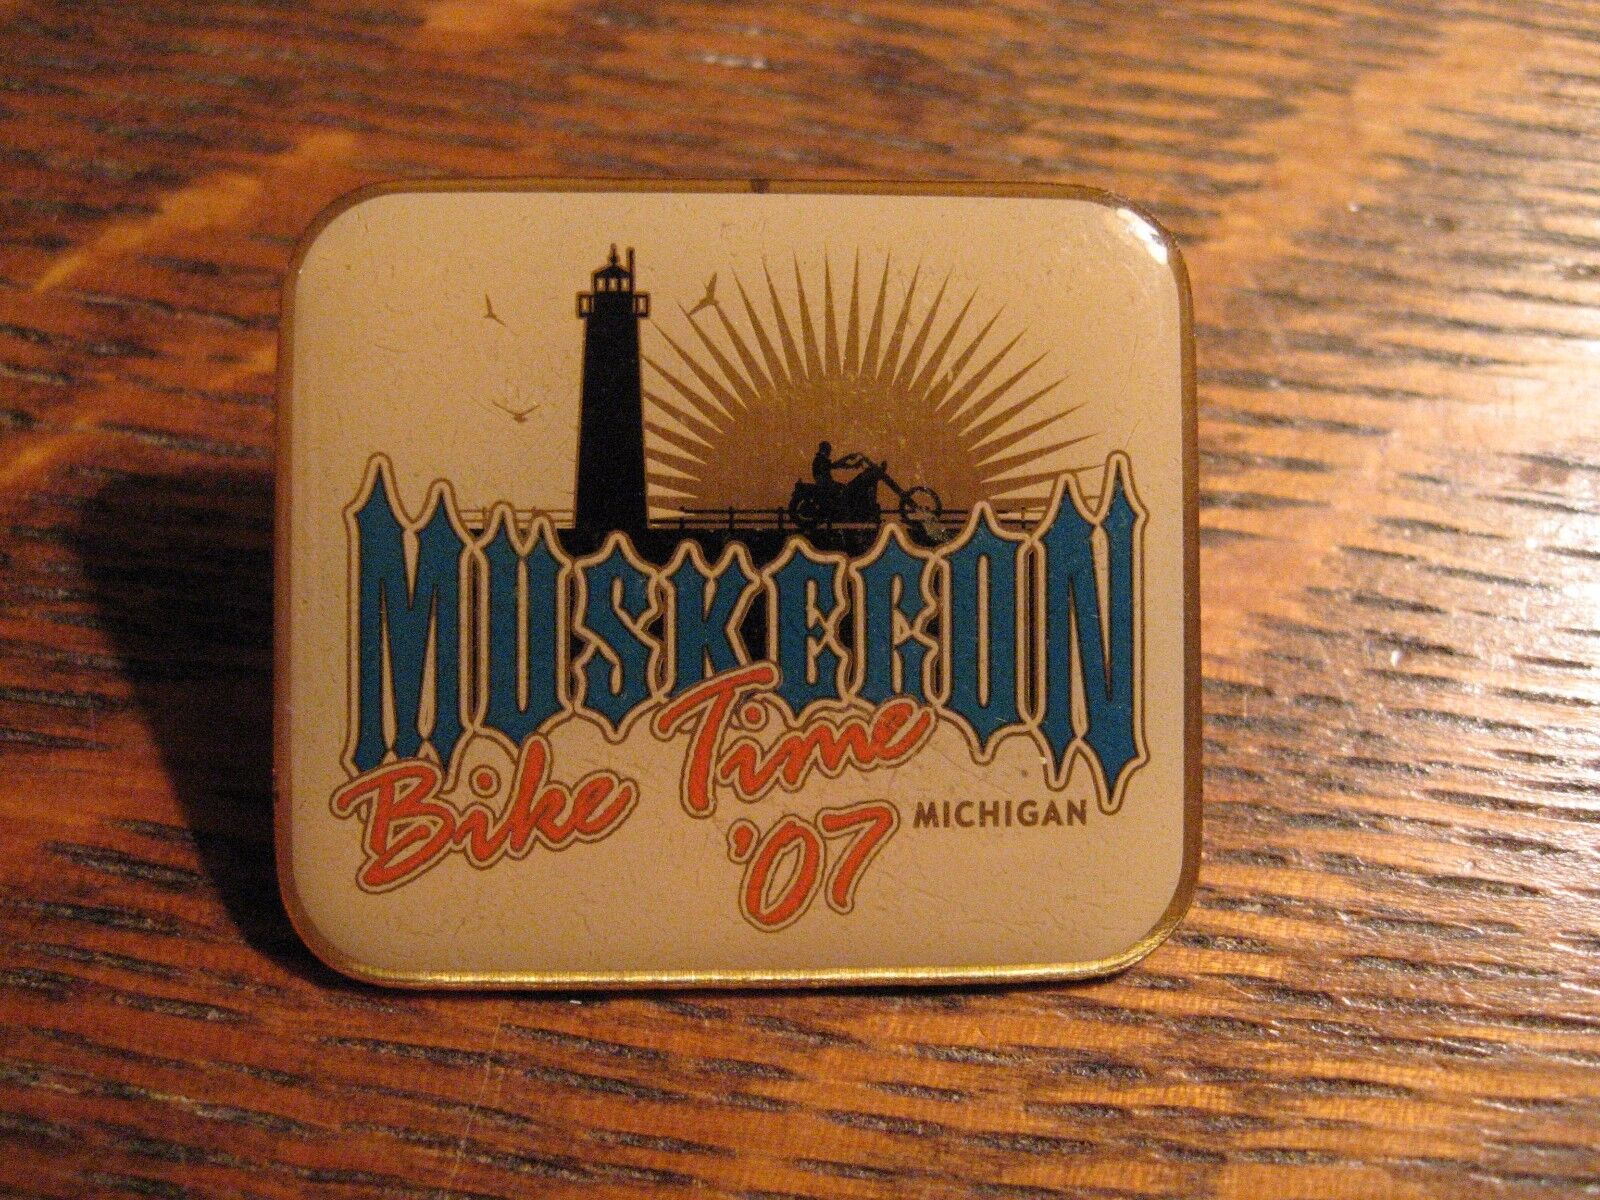 🏍 Muskegon MI Bike Time Pin - 2007 Michigan USA Motorcycle Biker Cycle Rally